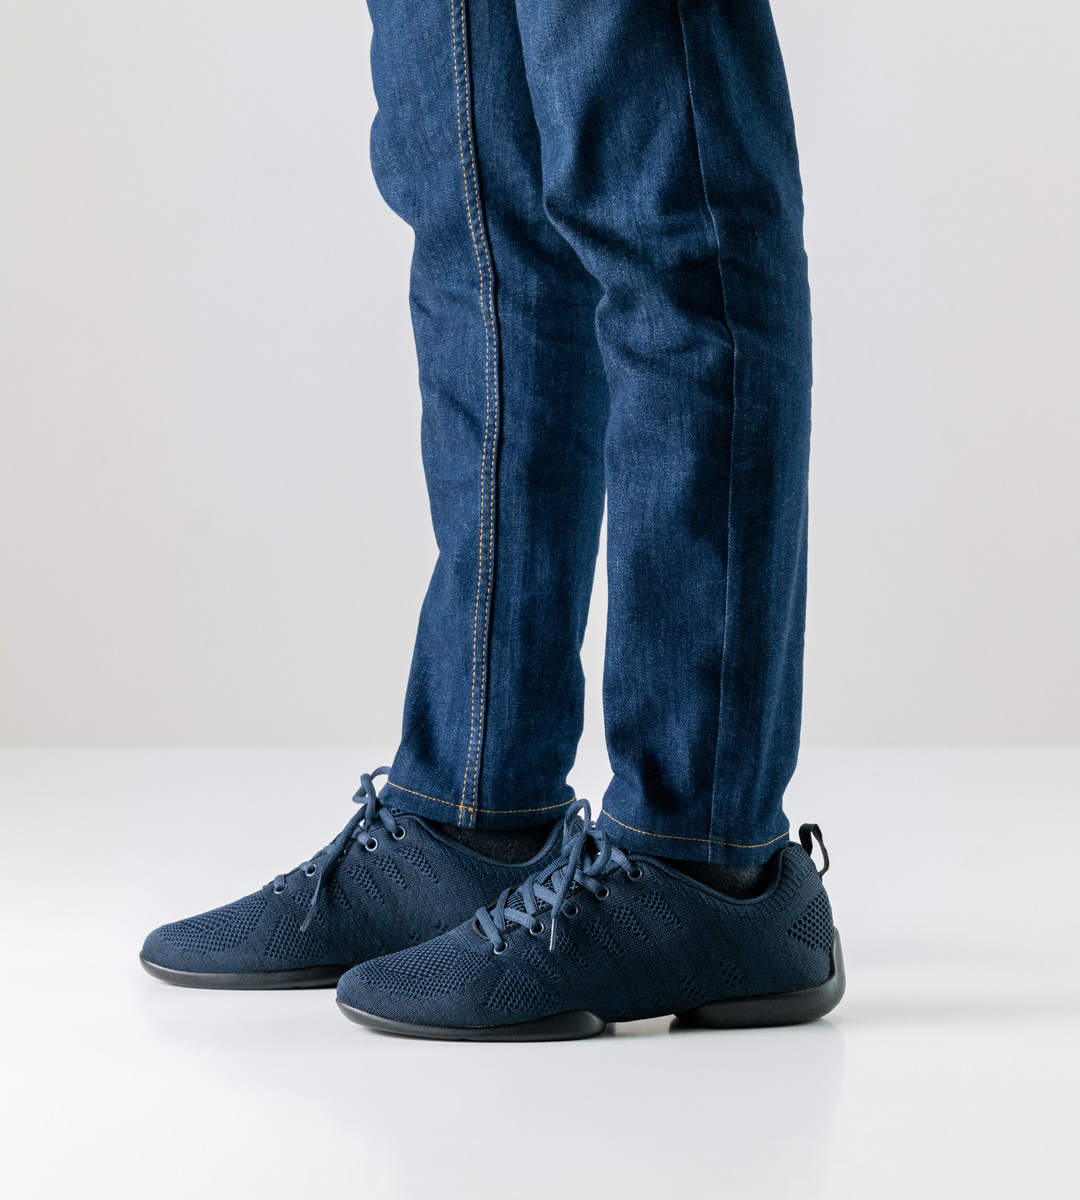 Blue men's dance sneaker in combination with blue jeans